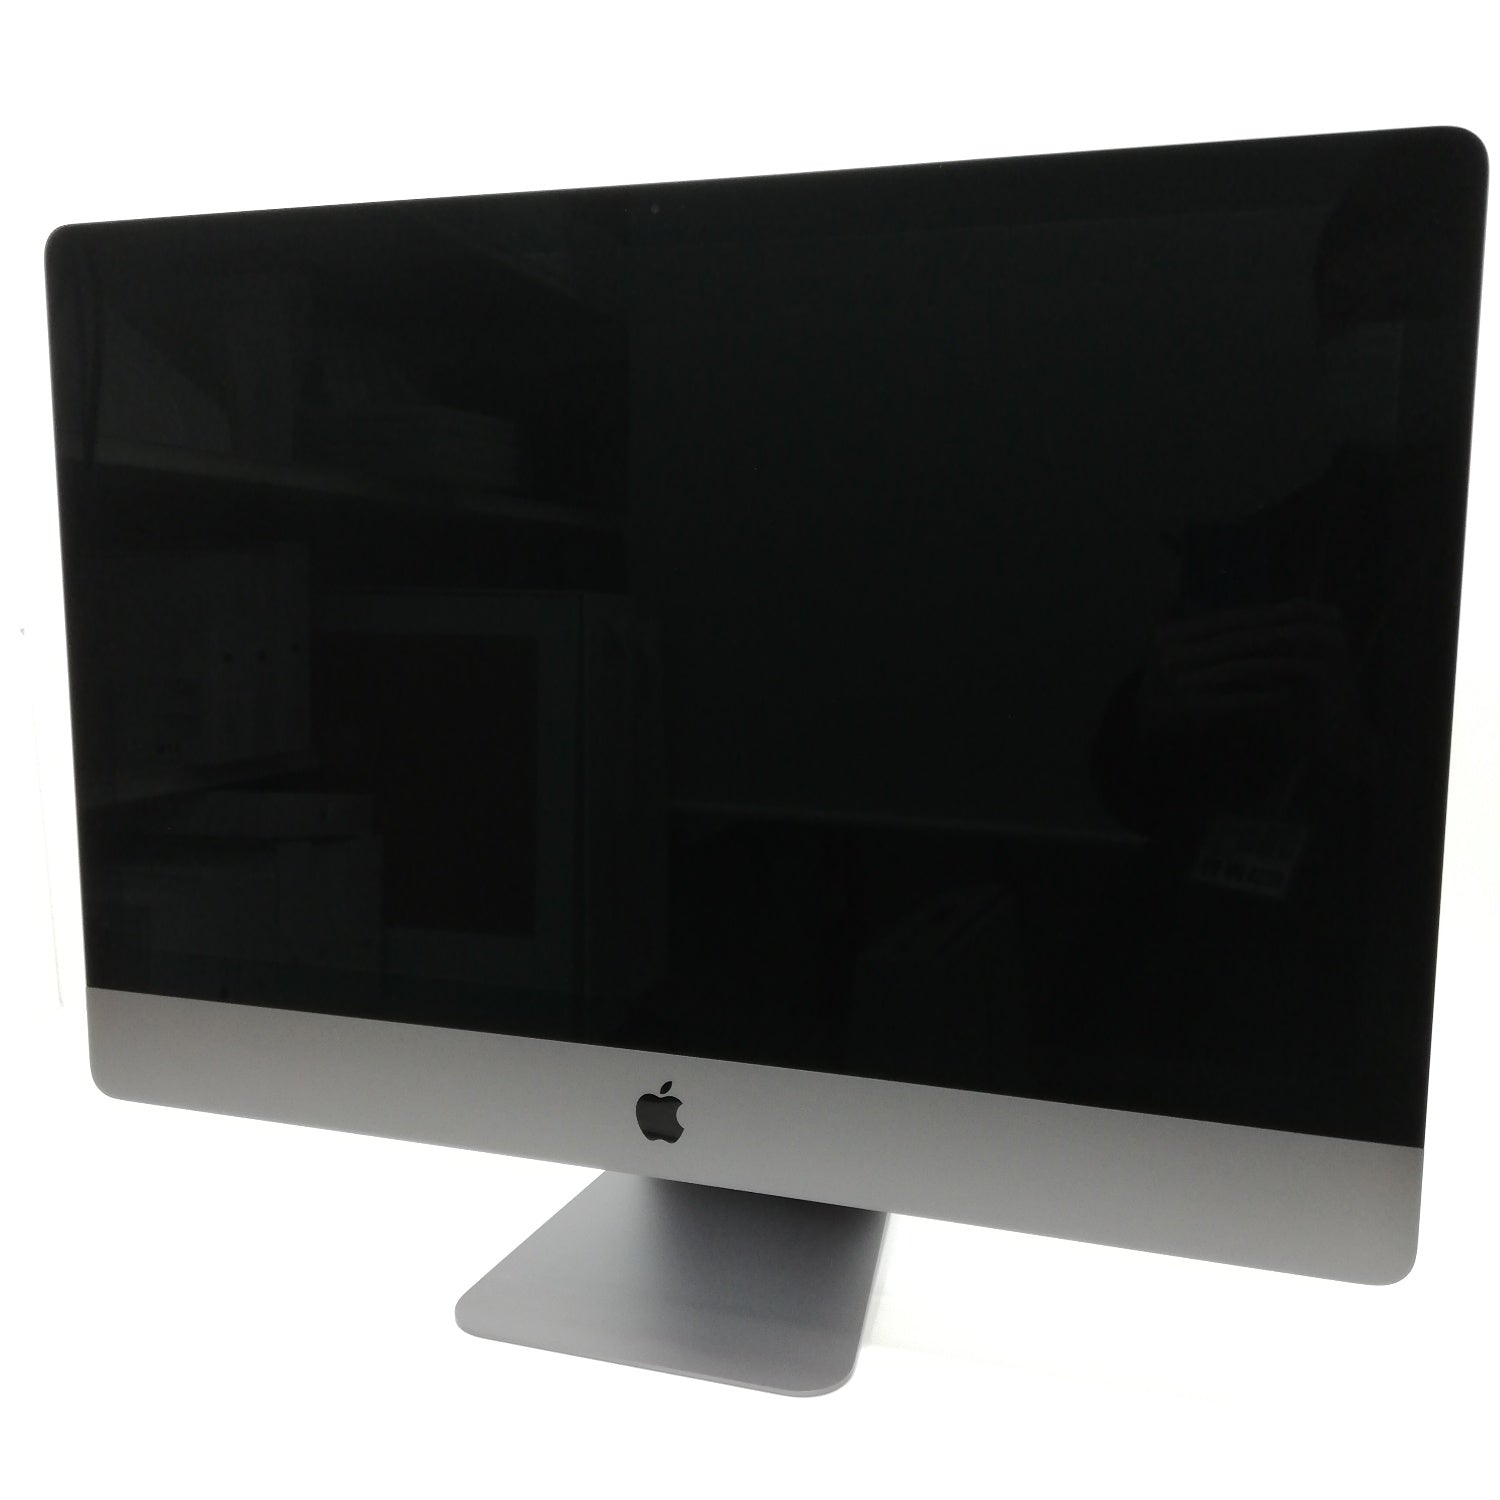 iMac Pro - Macデスクトップ